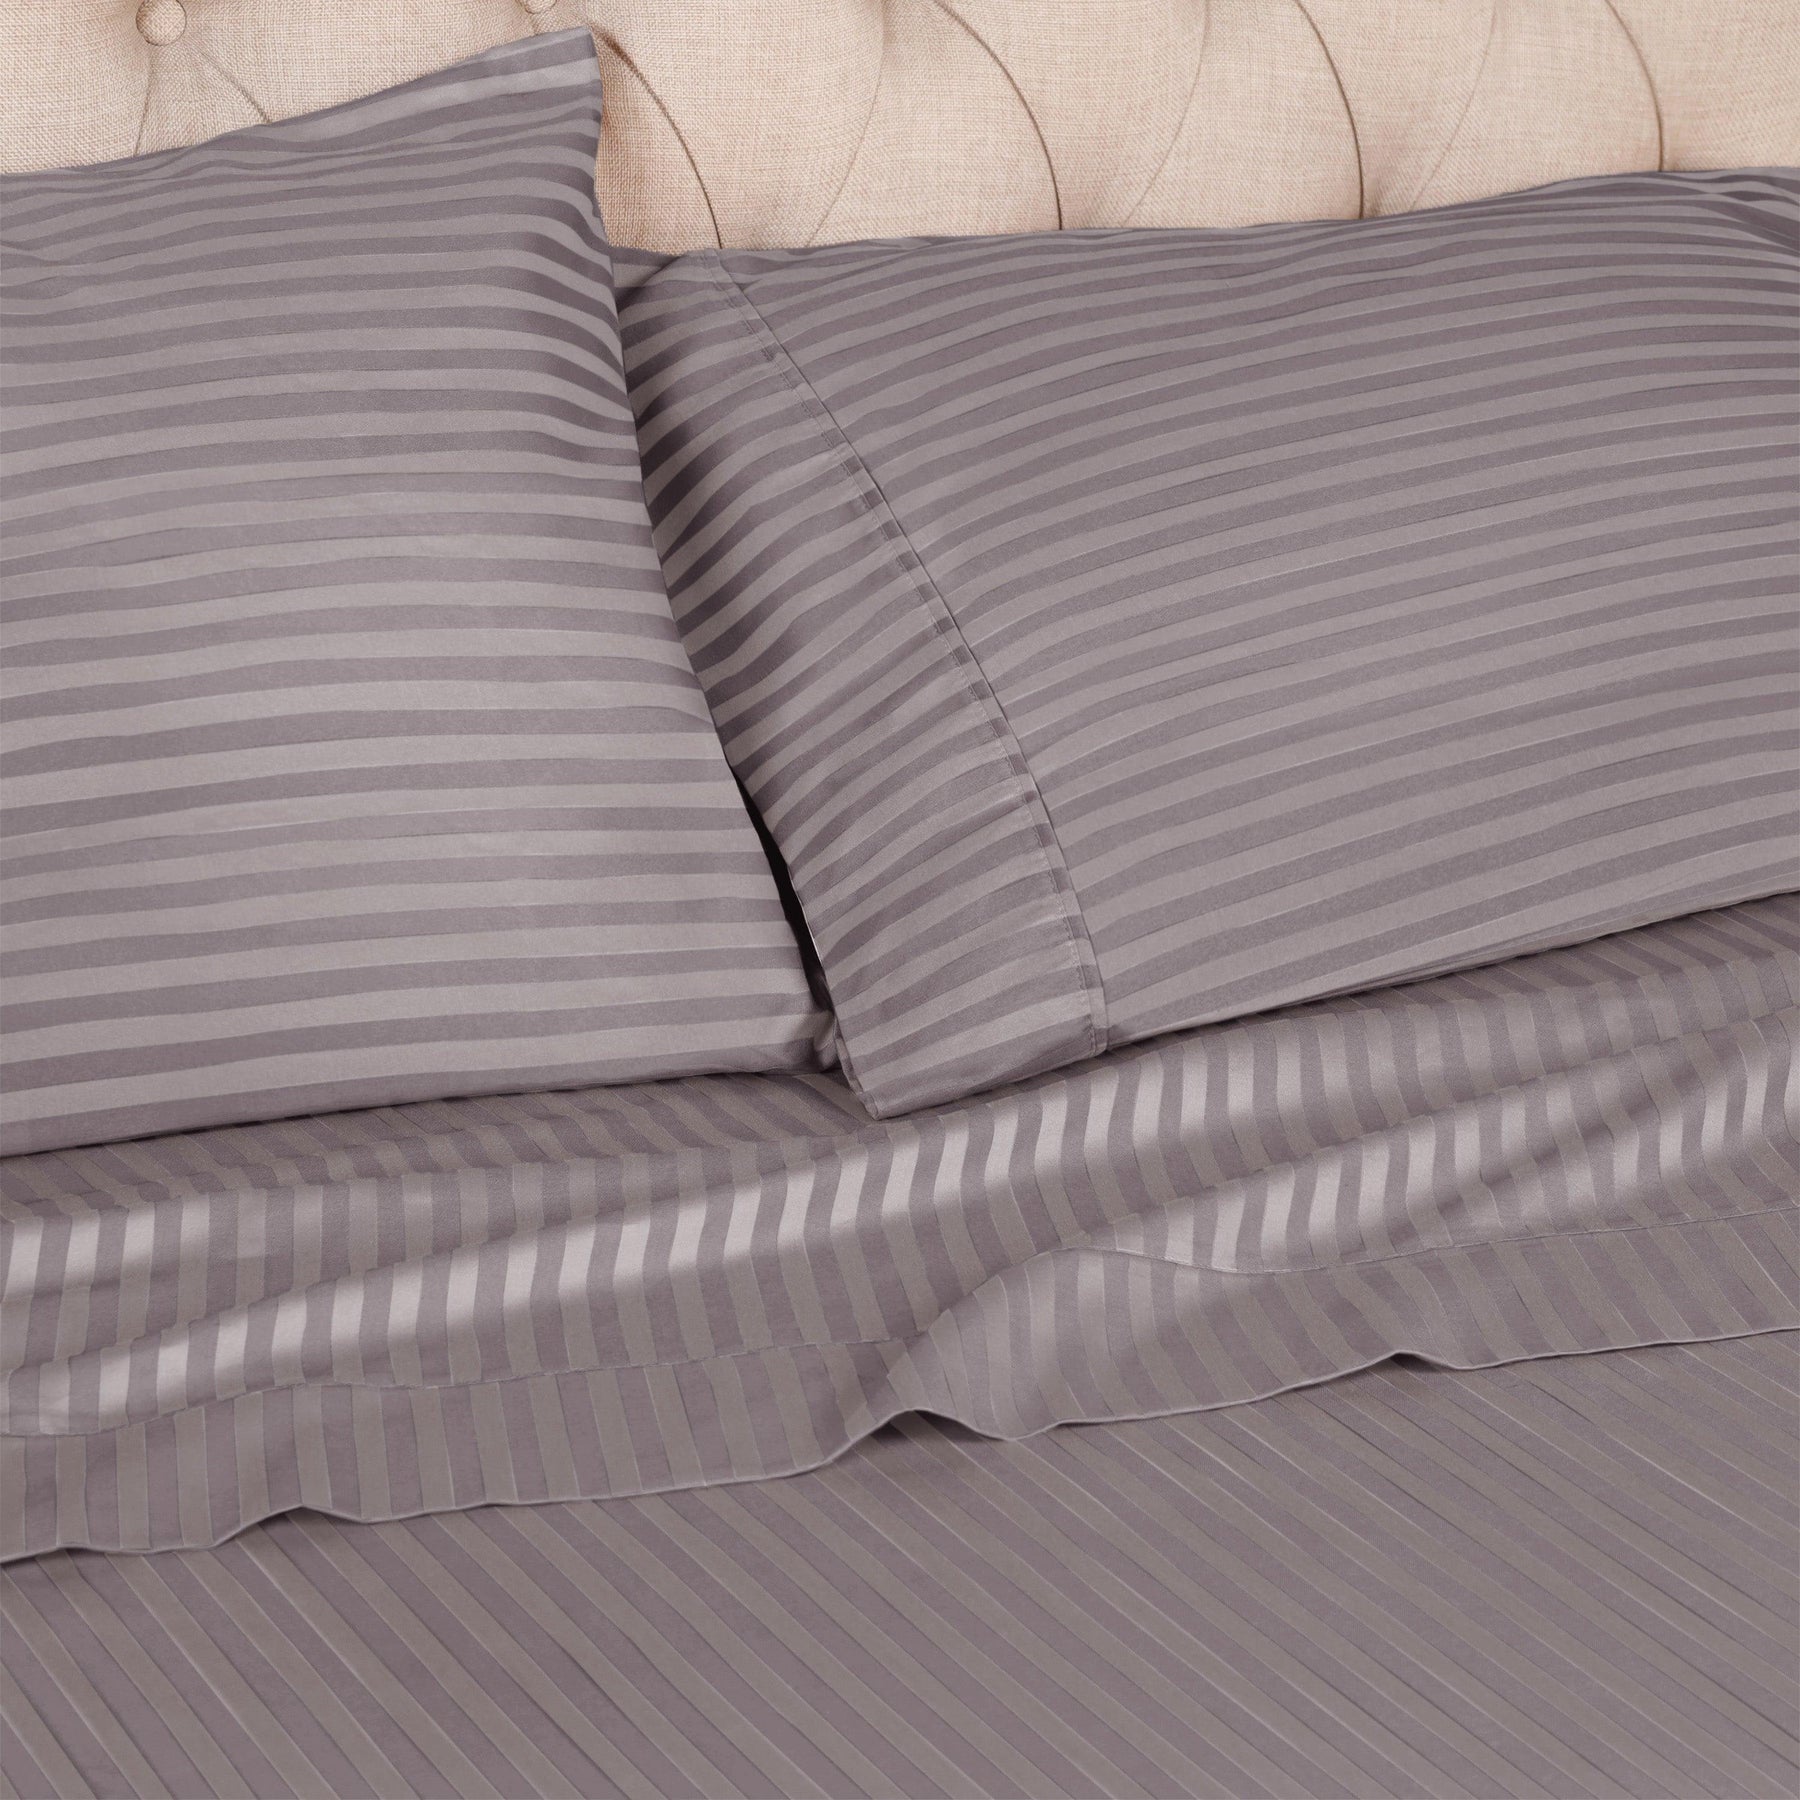 300 Thread Count Soft Egyptian Cotton Pillowcase Set - Grey